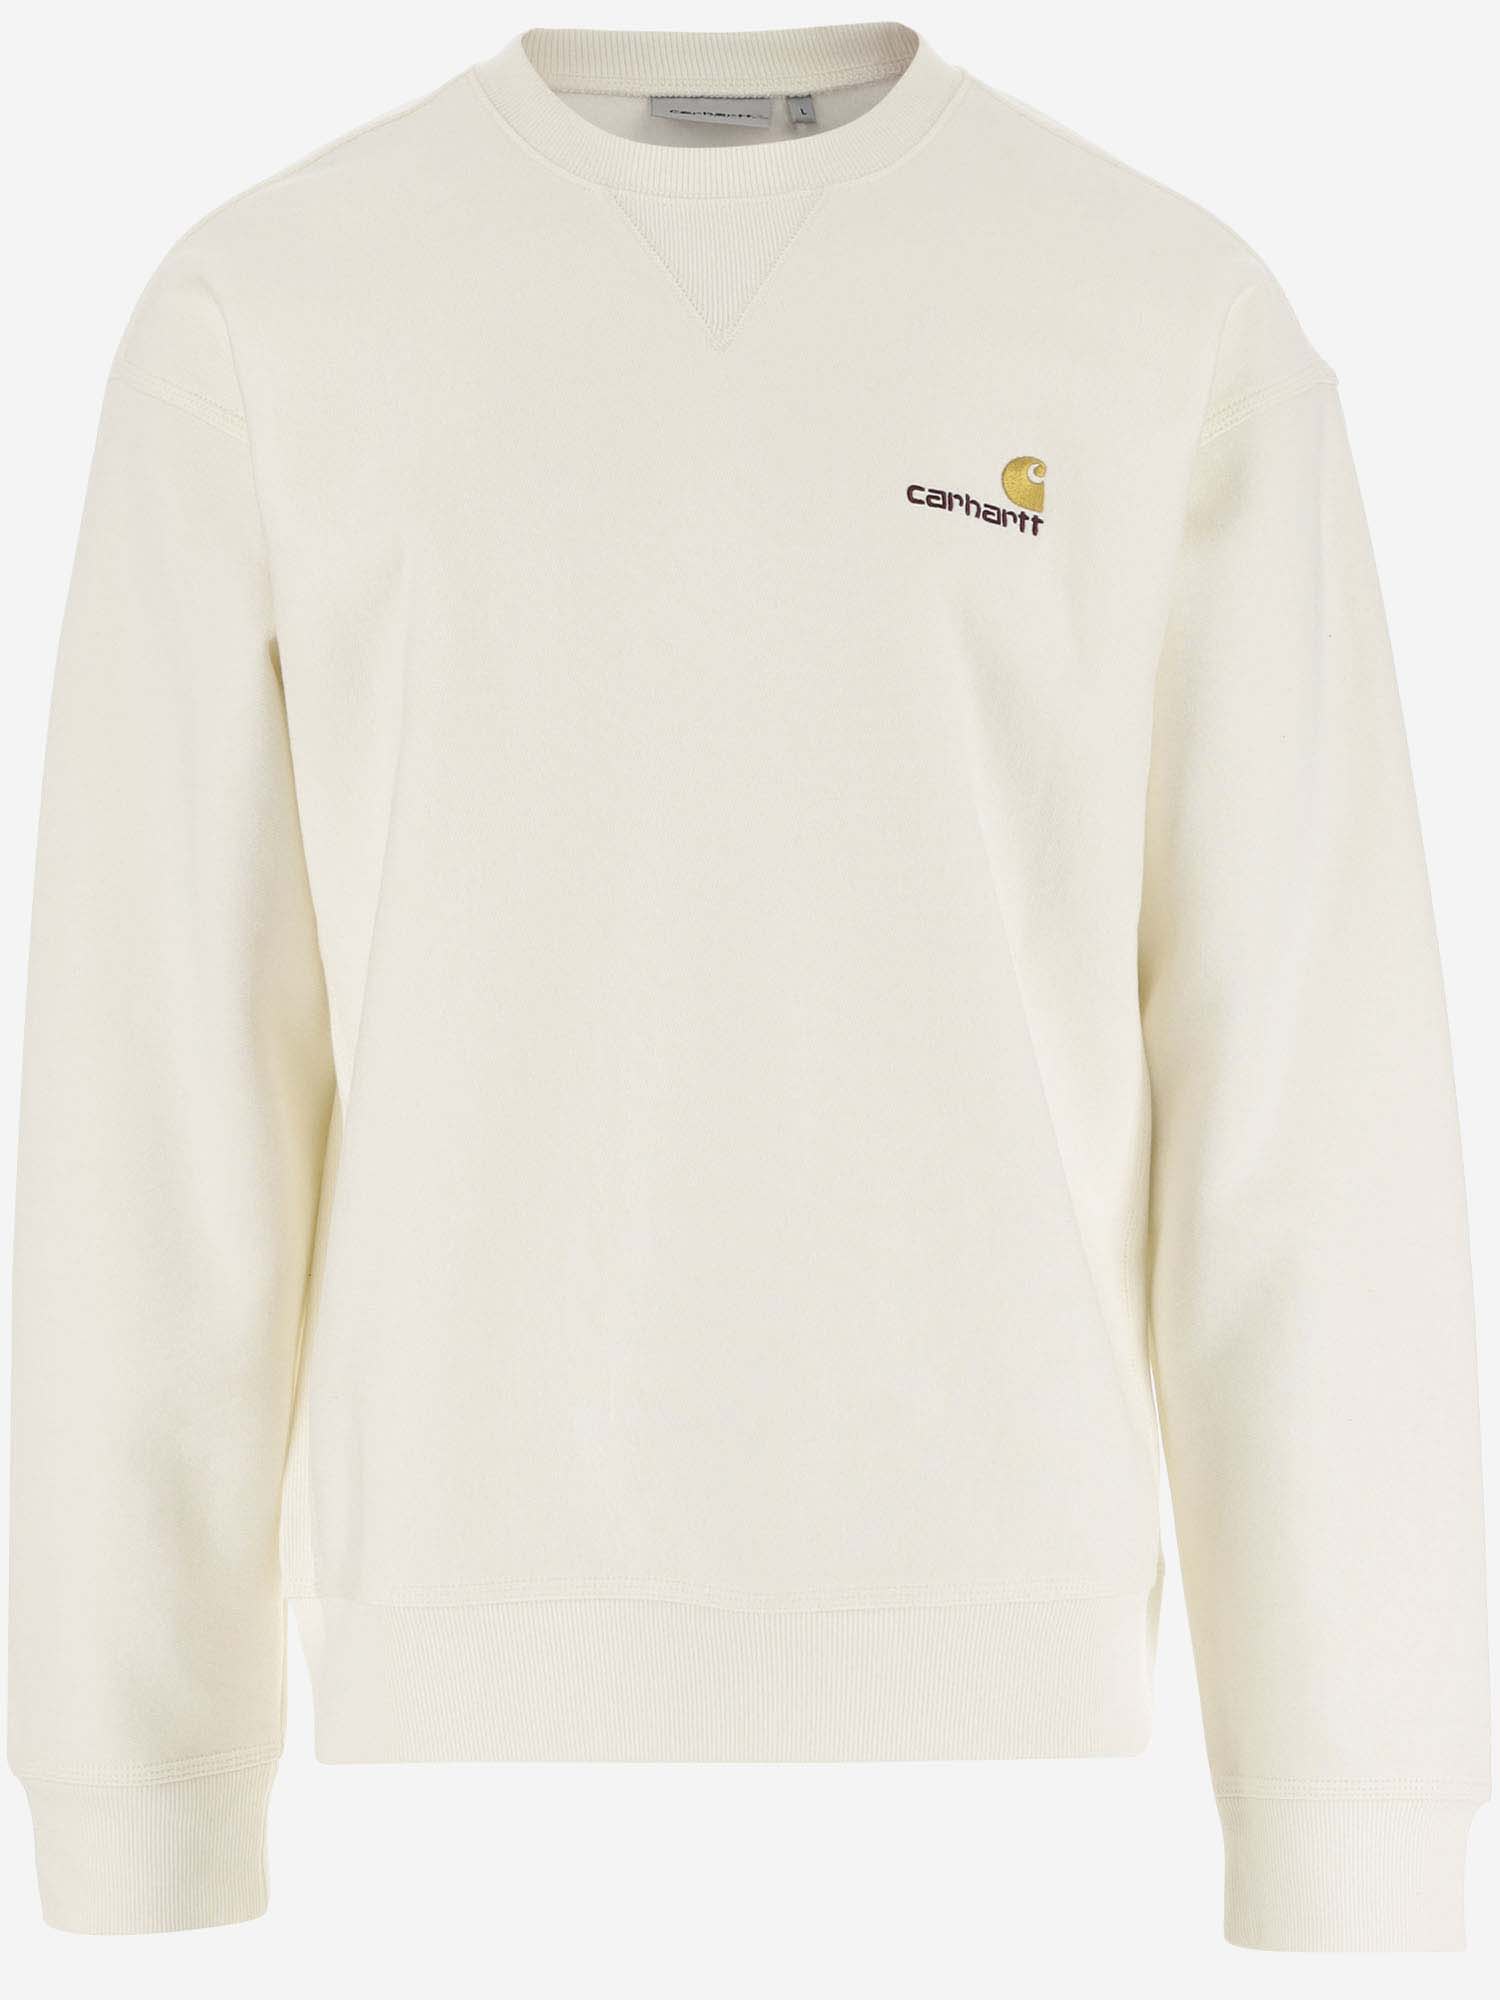 Carhartt Cotton Blend Sweatshirt With Logo In Wax